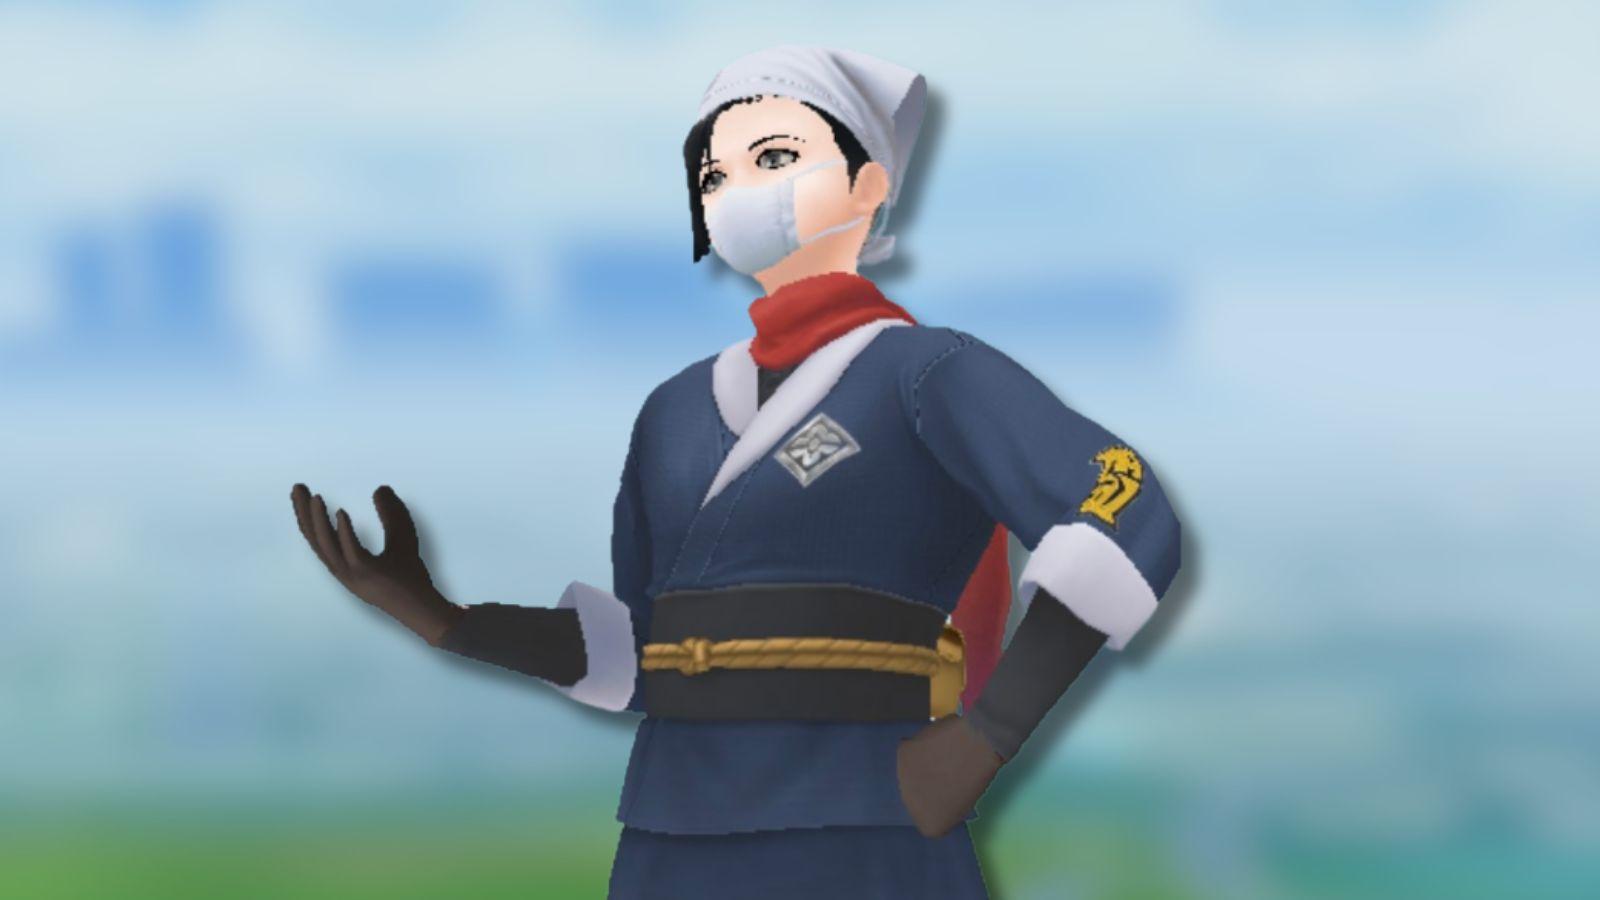 Pokemon Go avatar with game background.